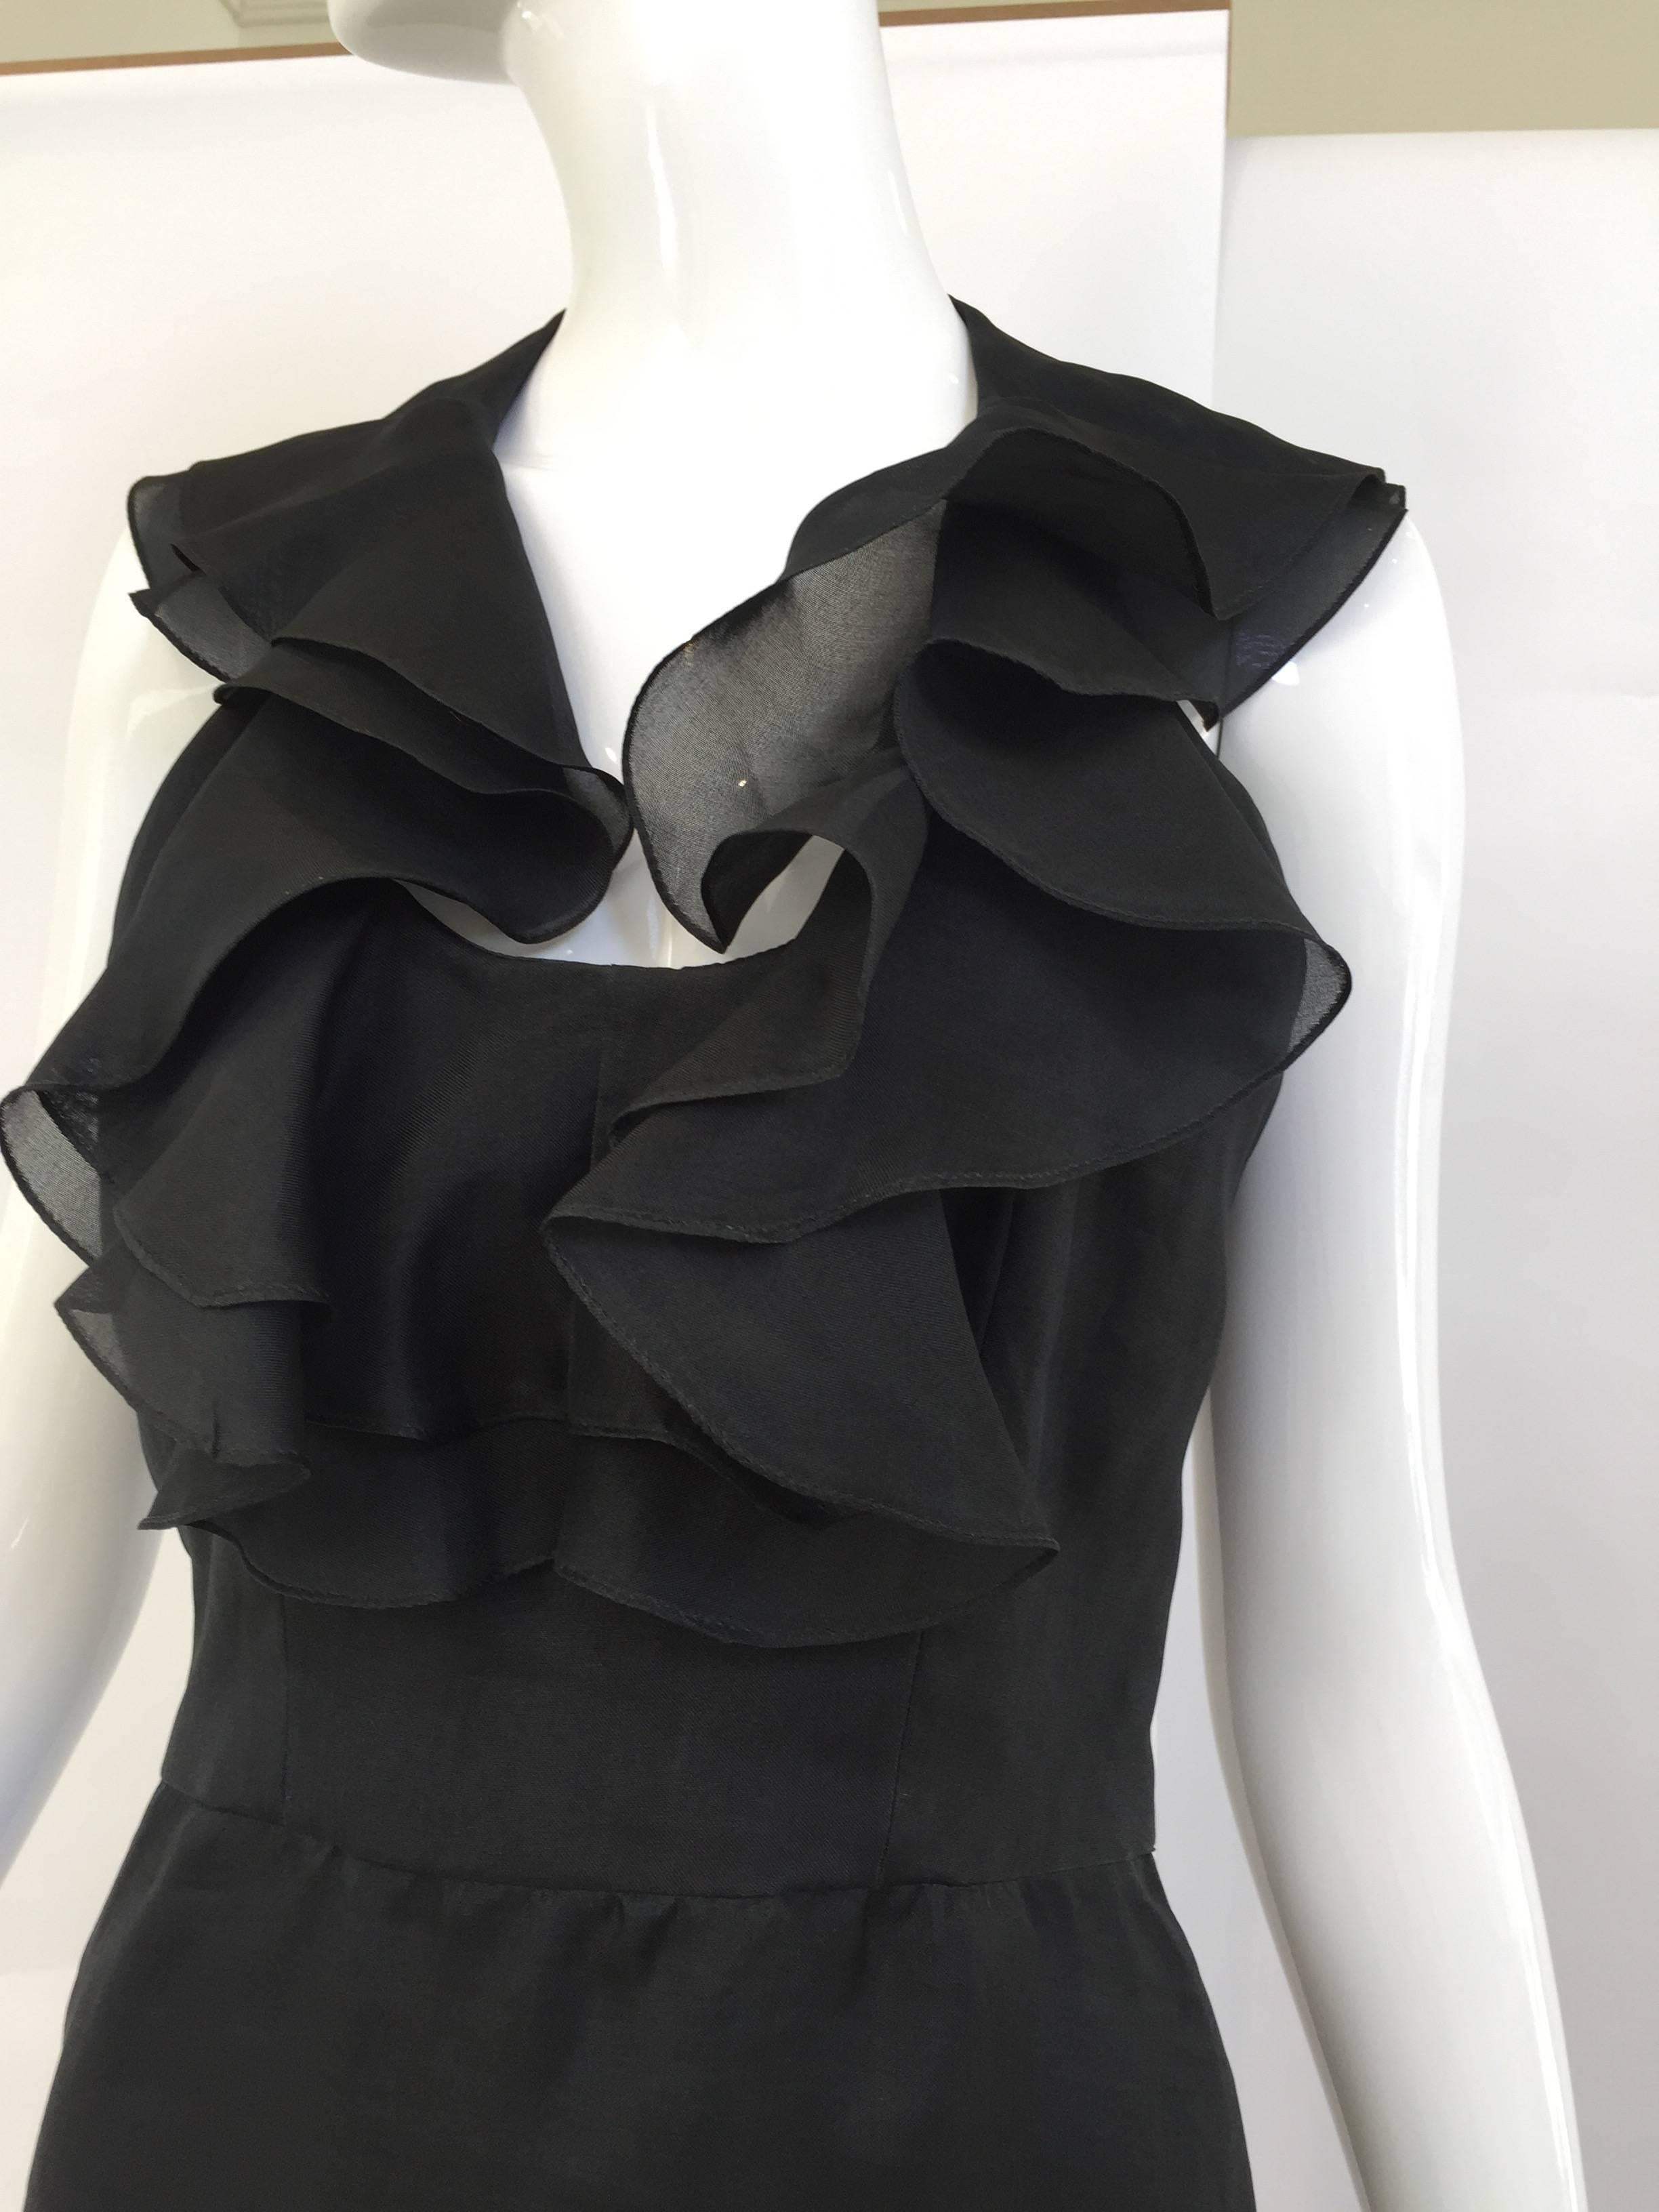 1970s Pierre Cardin black silk organza halter dress.
Bust: 34